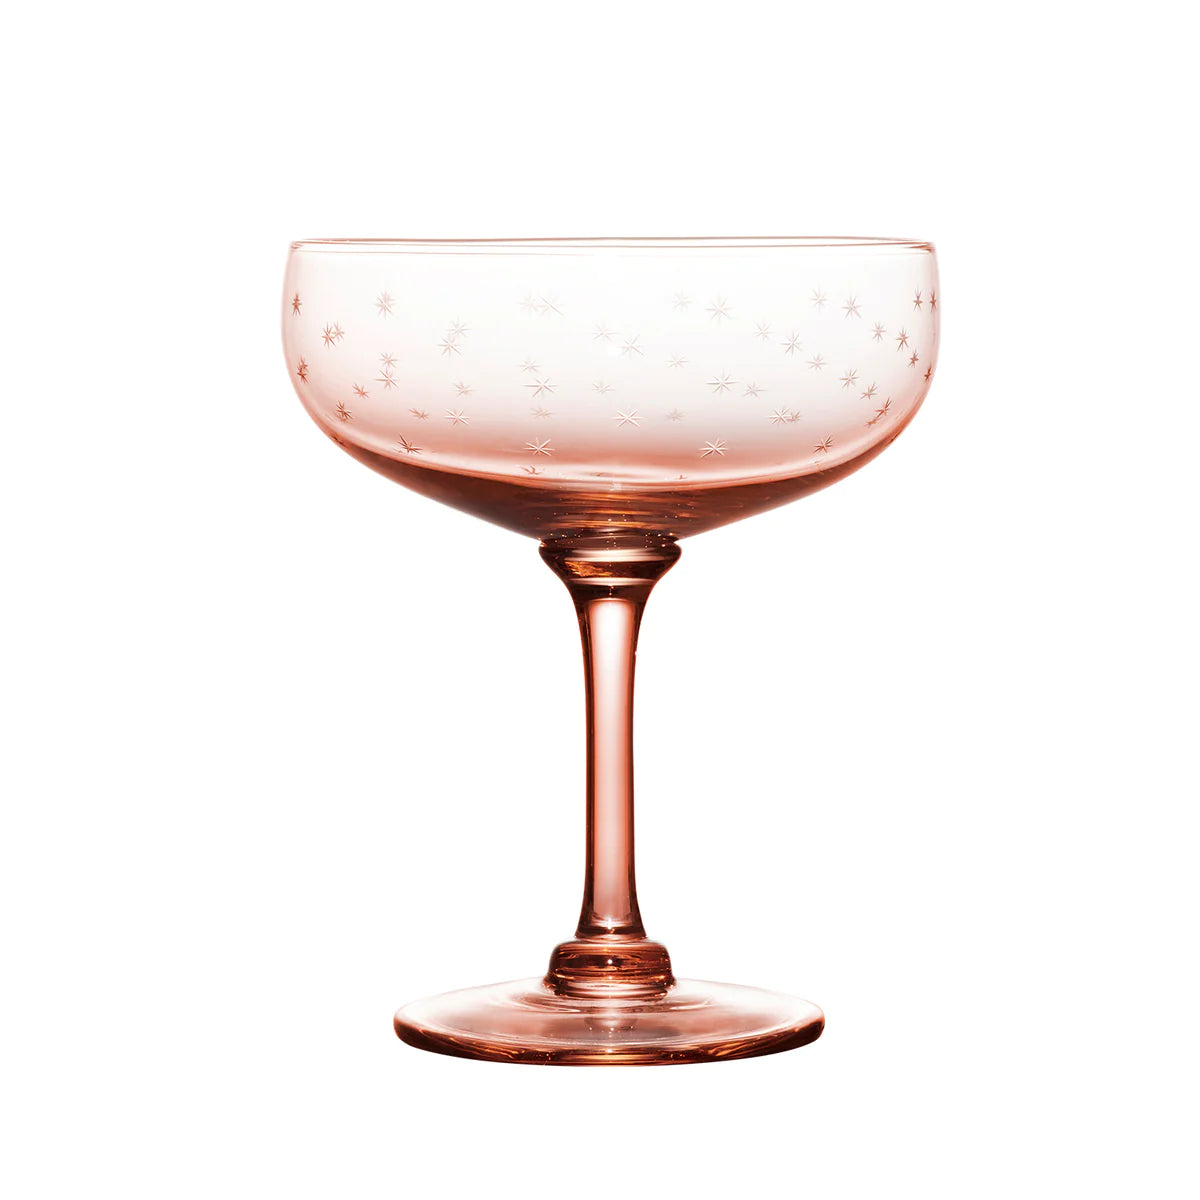 Rose Cocktail Glasses With Stars Design, Set of 4